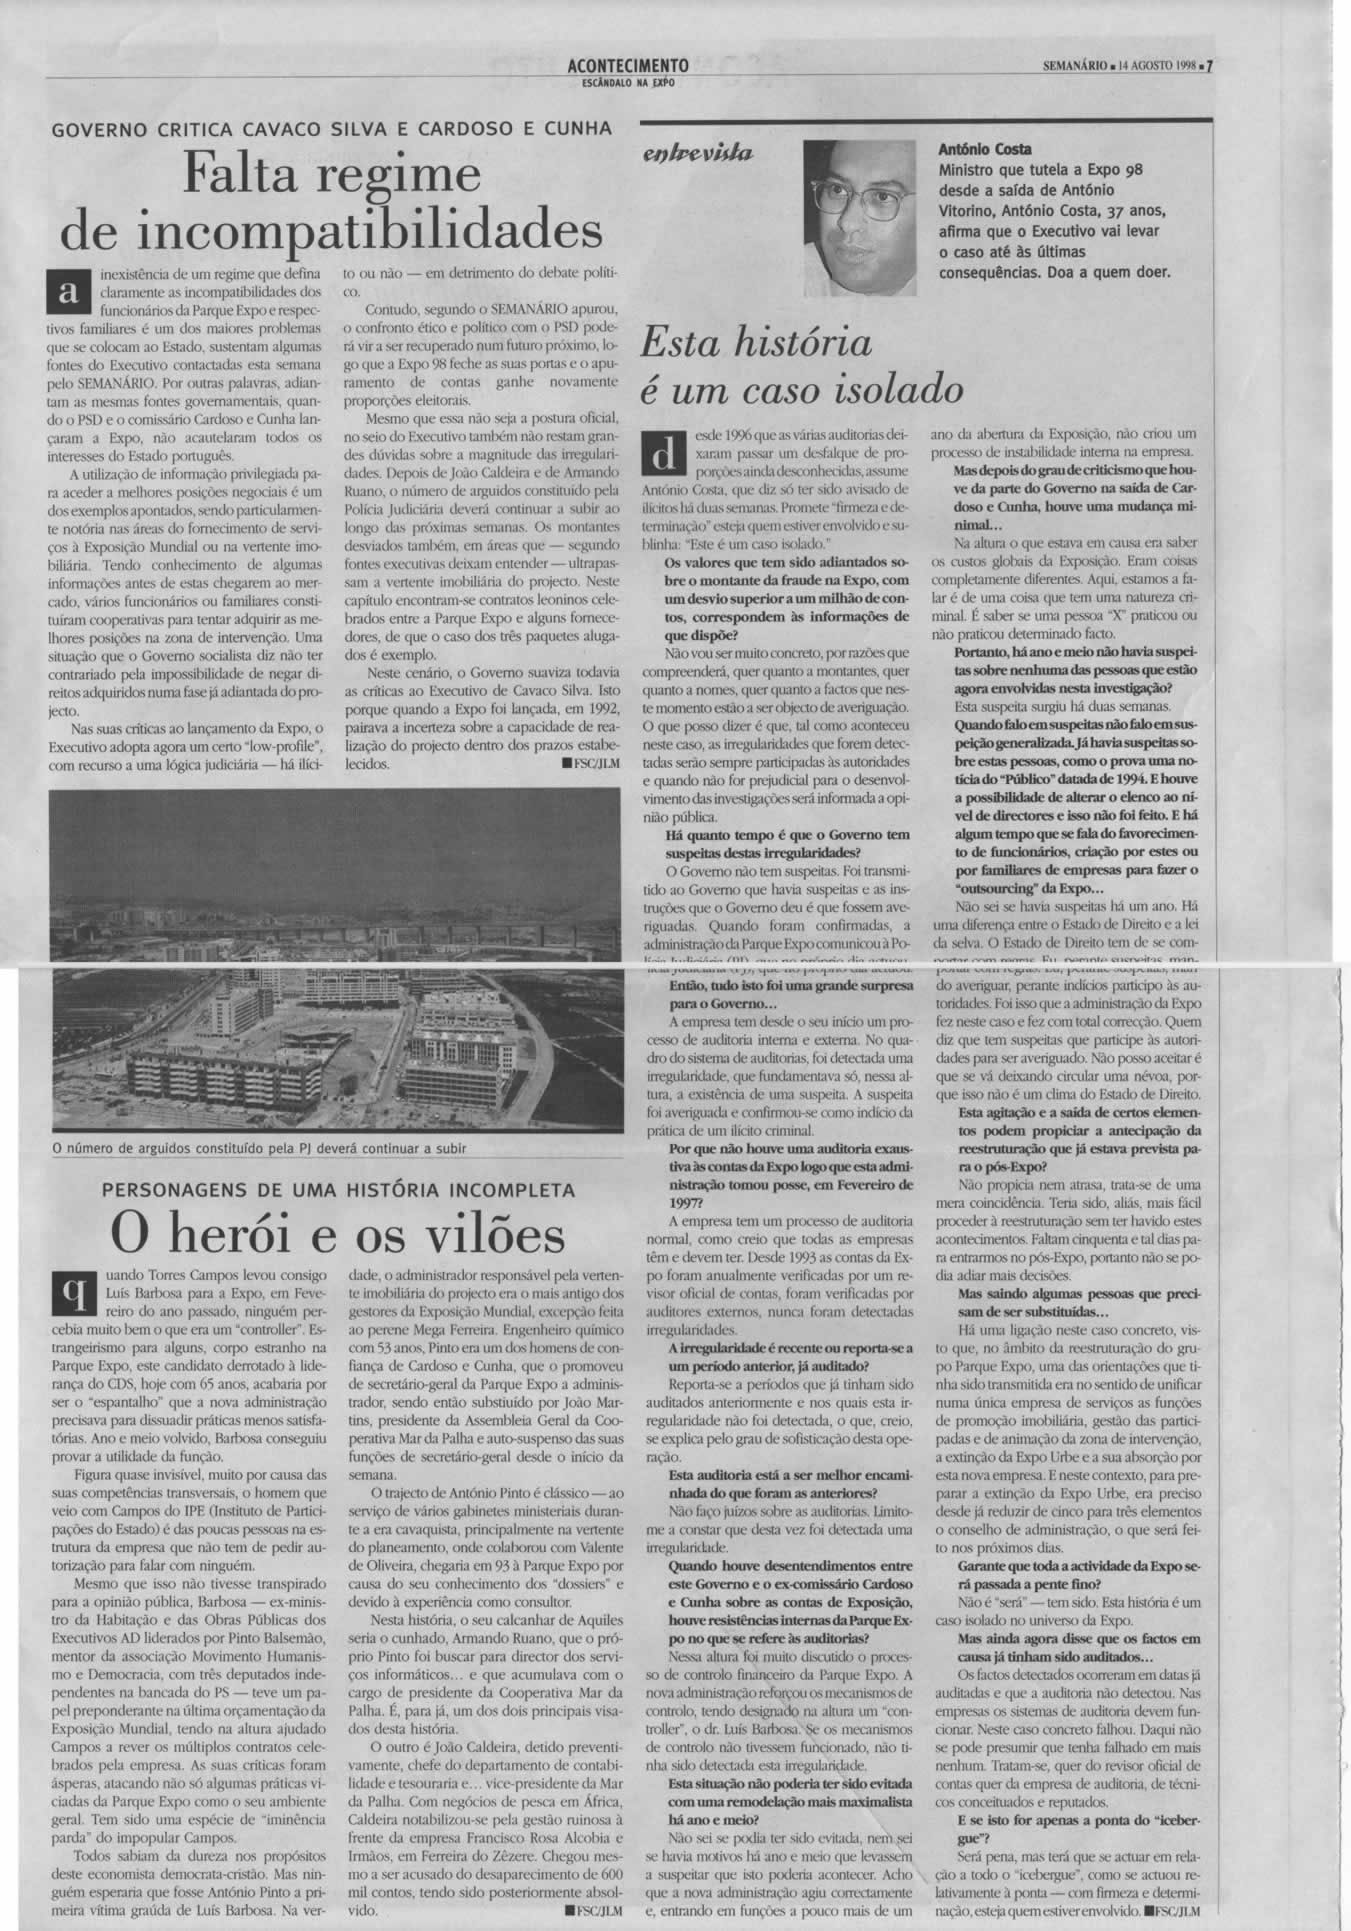 19980814_Semanario-2_jpg.jpg